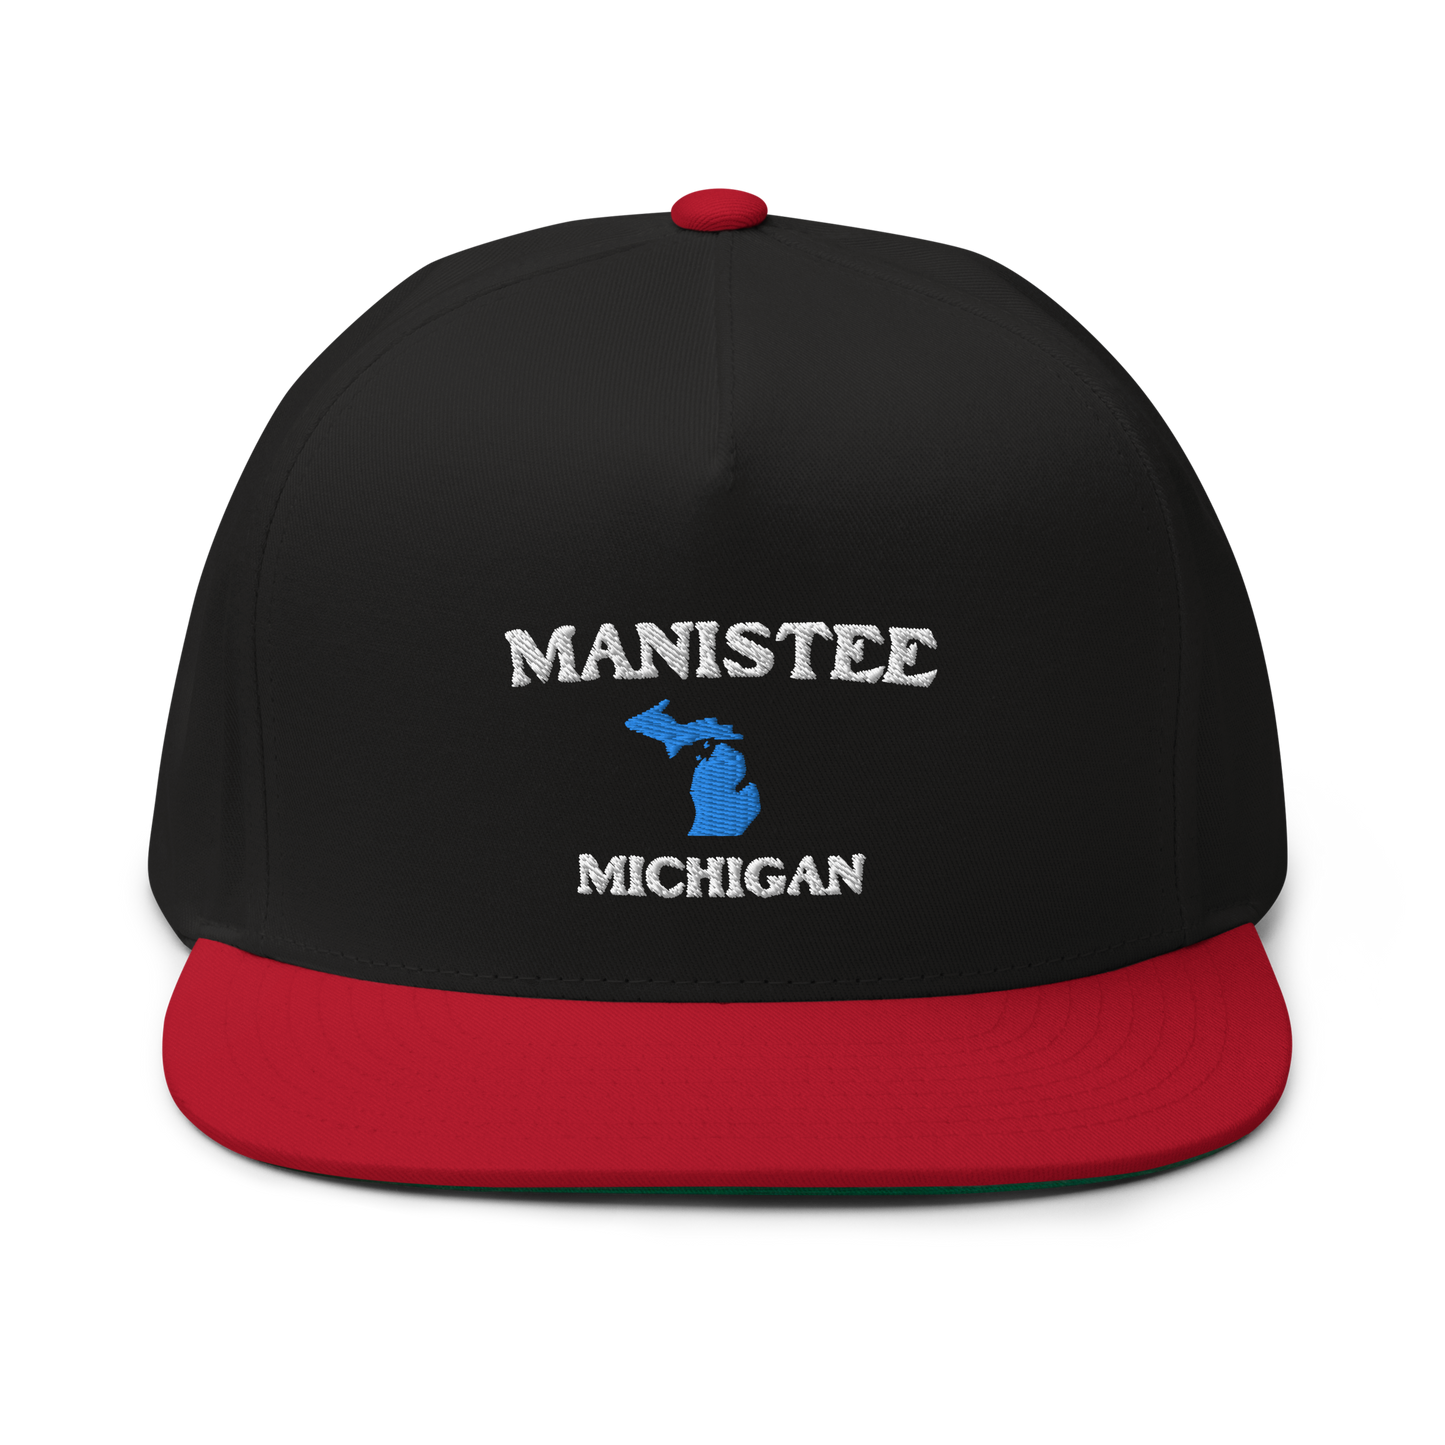 'Manistee Michigan' Flat Bill Snapback (w/ Michigan Outline)